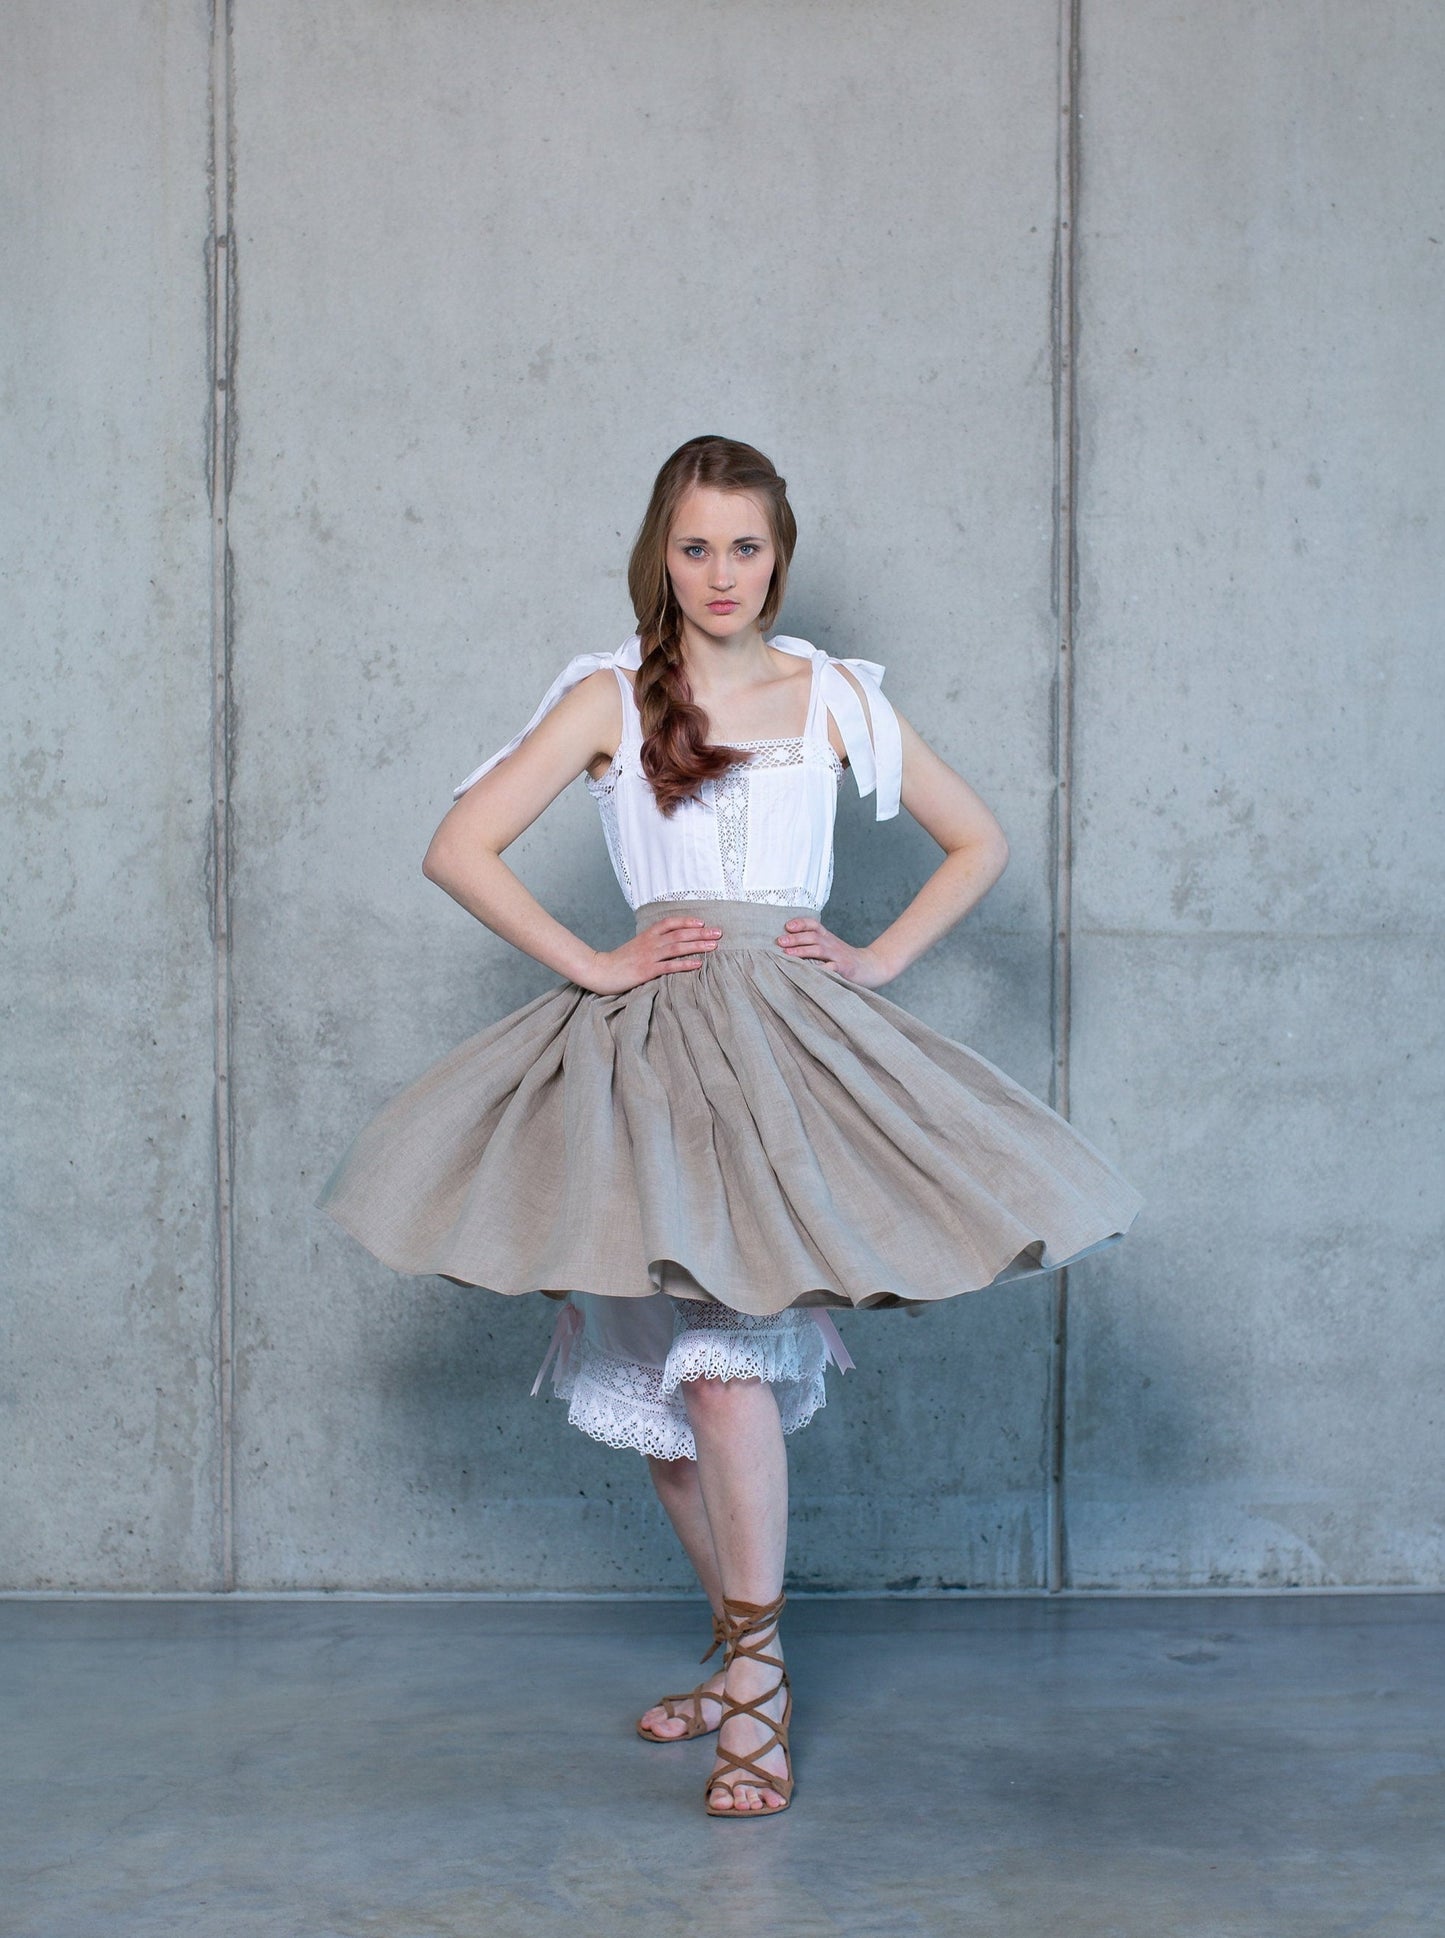 Gretel with an Attitude - Skirt and Victorian Inspired Underwear Set